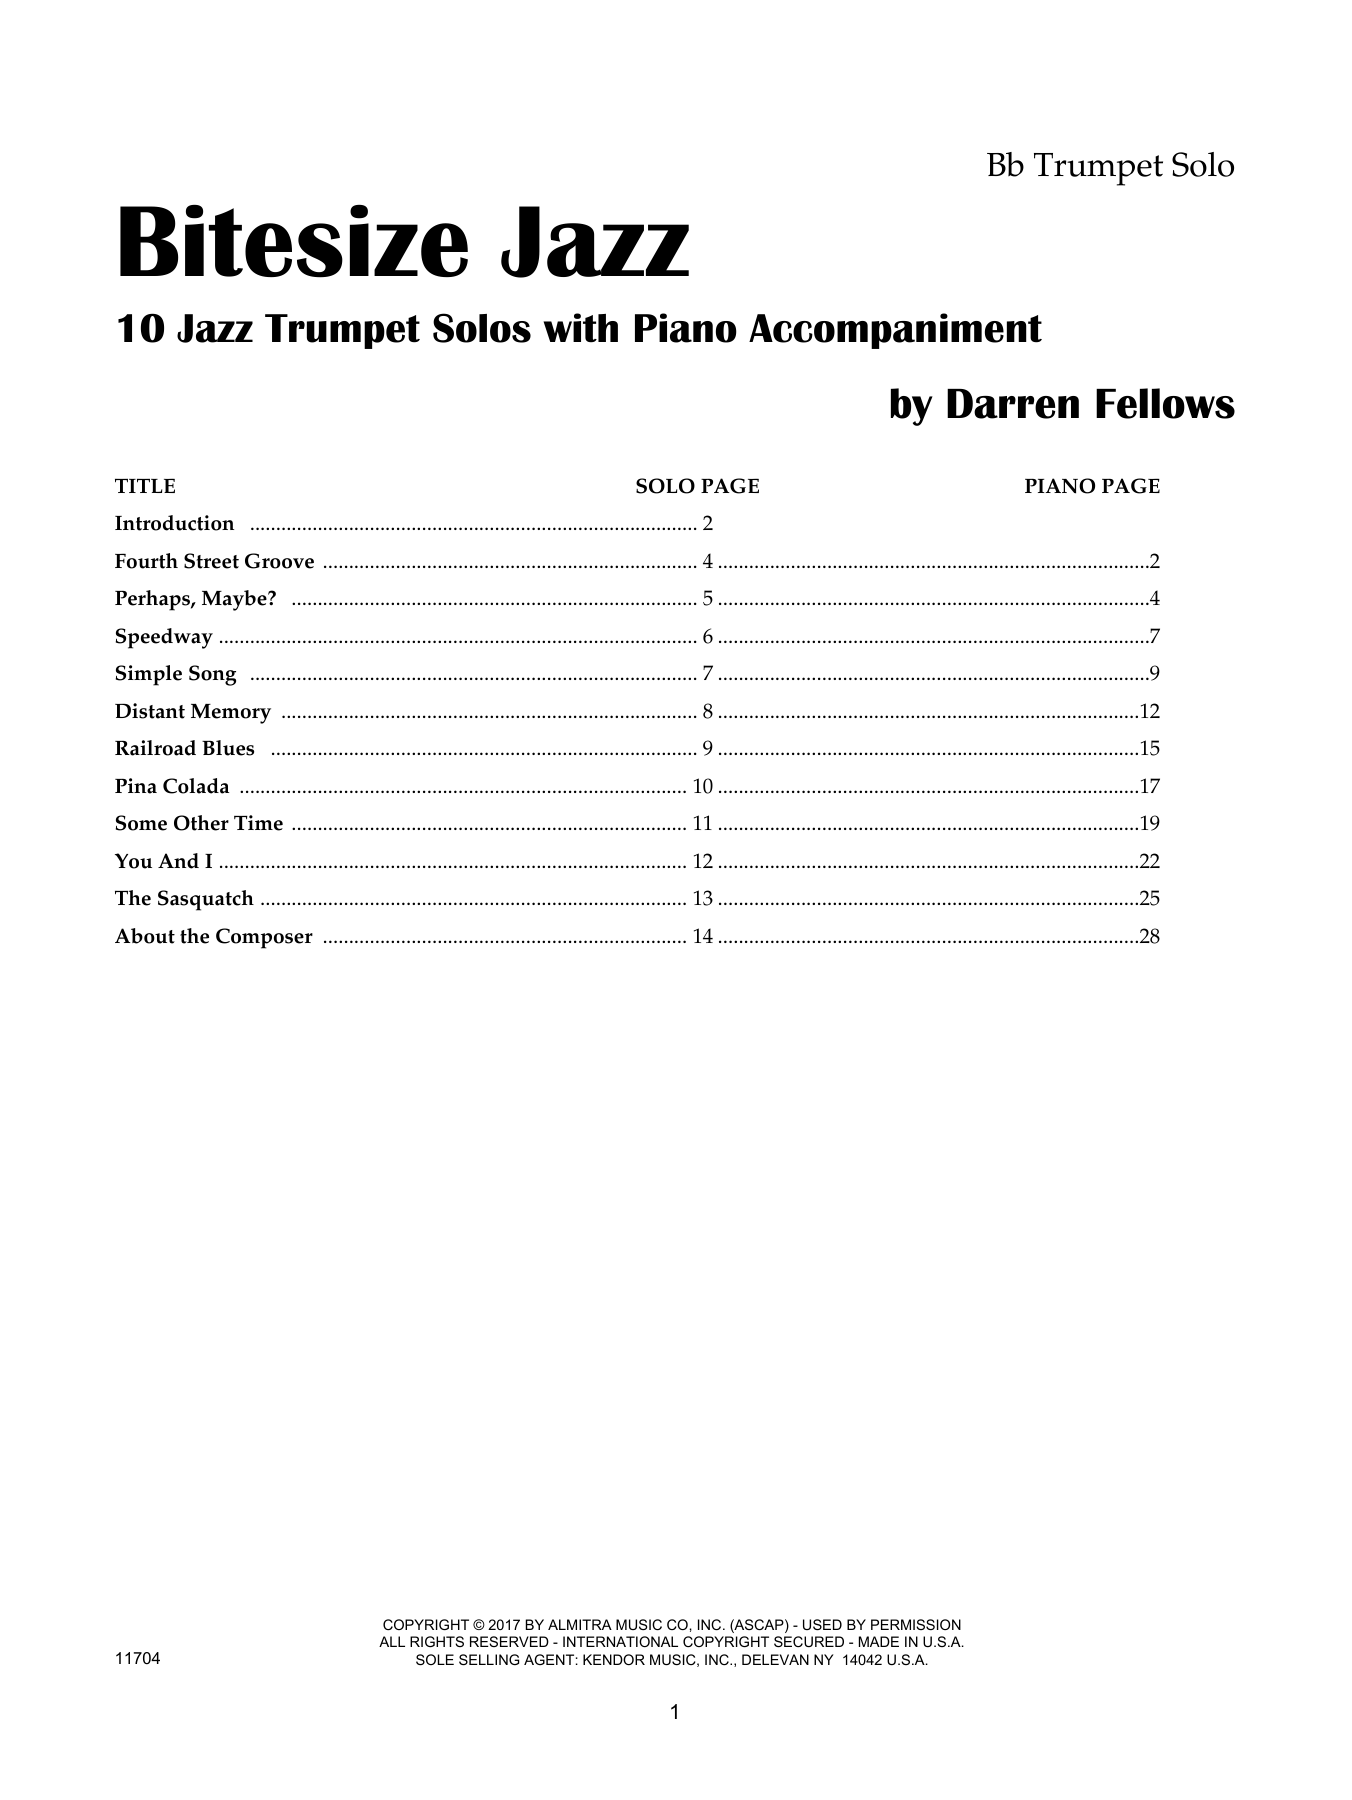 Download Darren Fellows Bitesize Jazz - Bb Trumpet Sheet Music